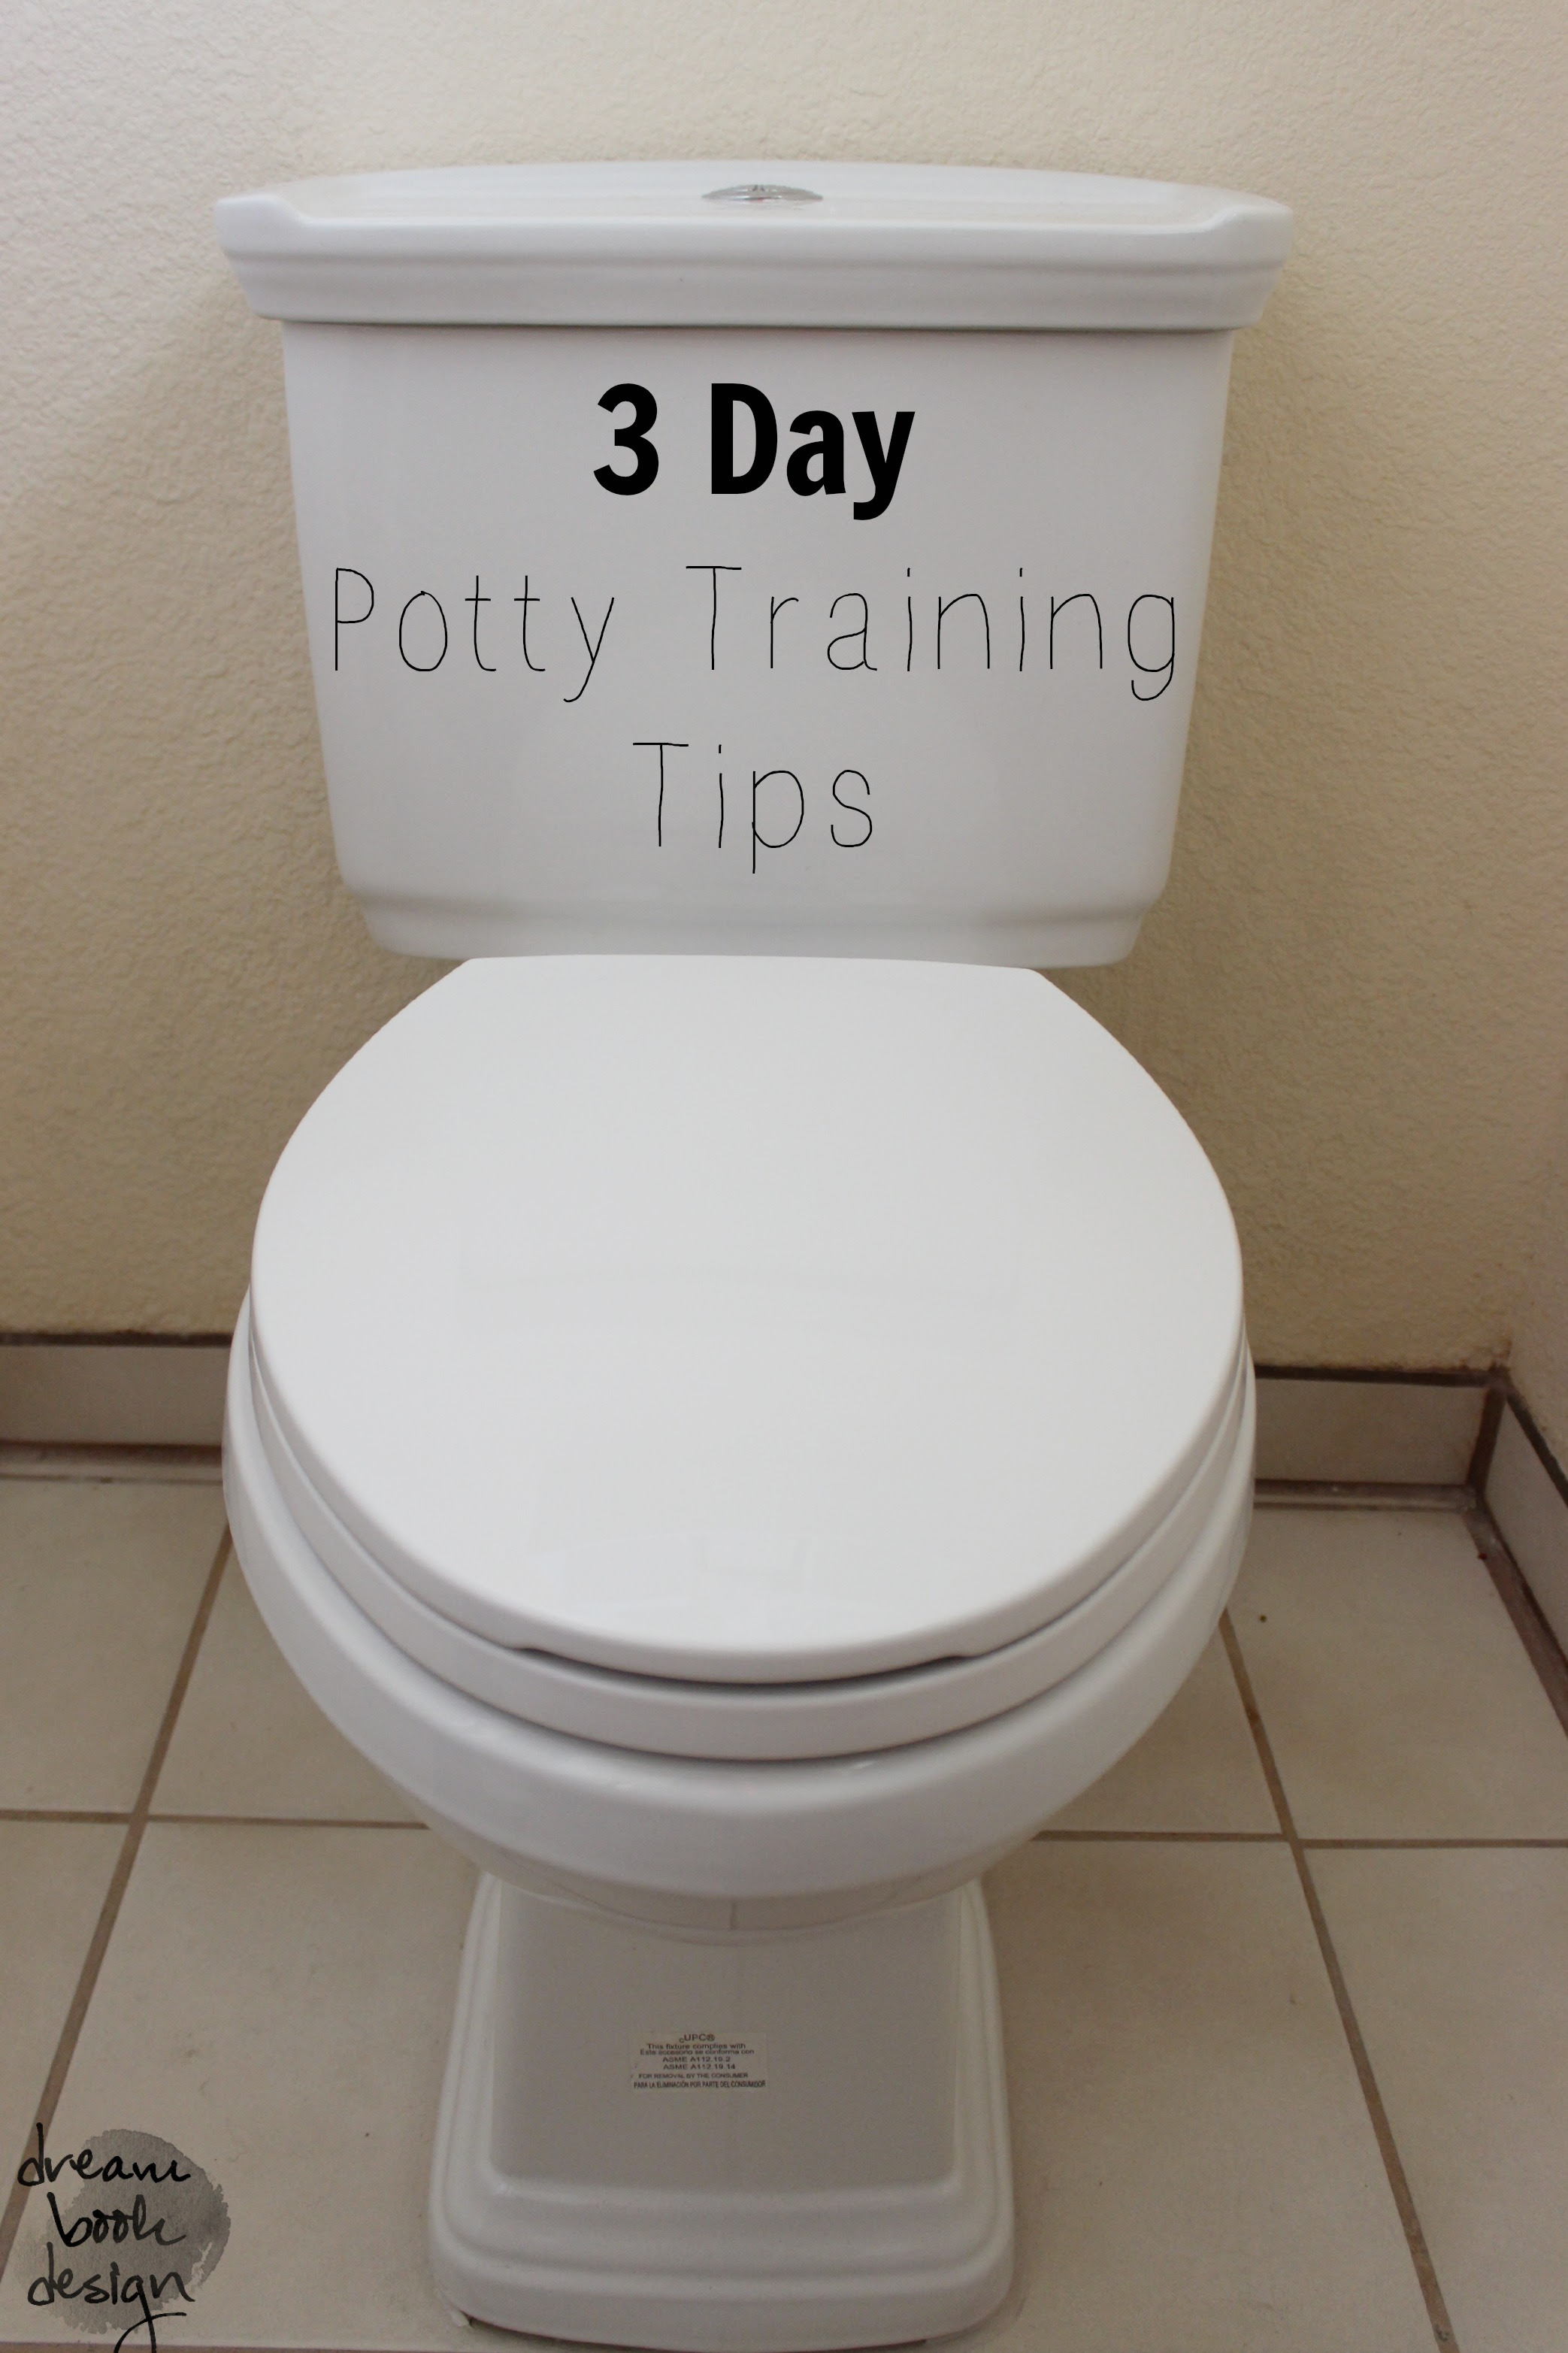 Potty Training In 3 Days - Dream Book Design